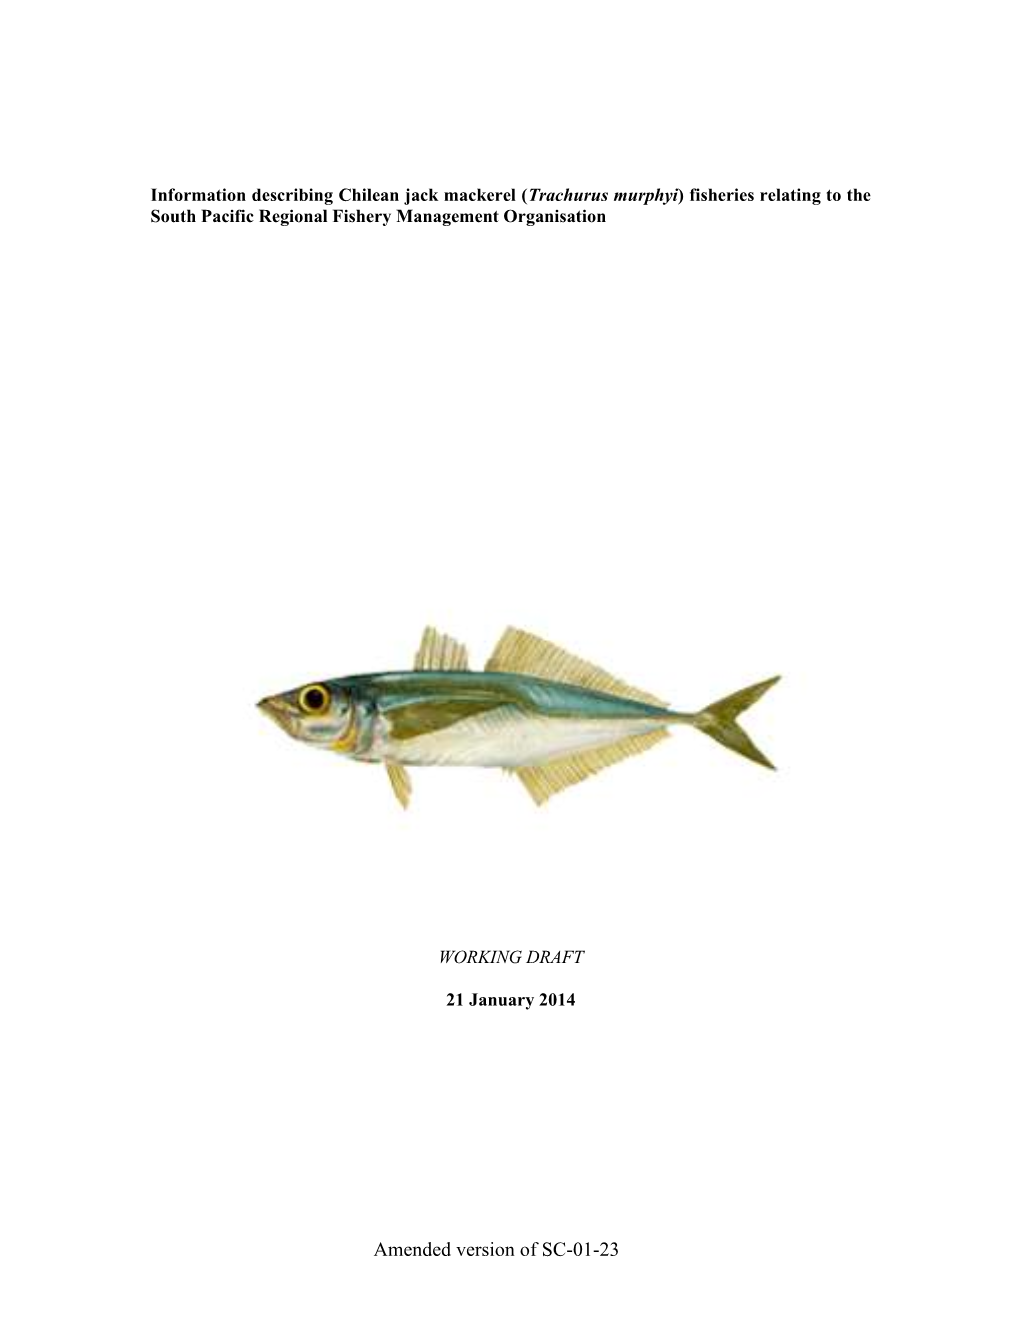 Information Describing Chilean Jack Mackerel (Trachurus Murphyi) Fisheries Relating to the South Pacific Regional Fishery Management Organisation